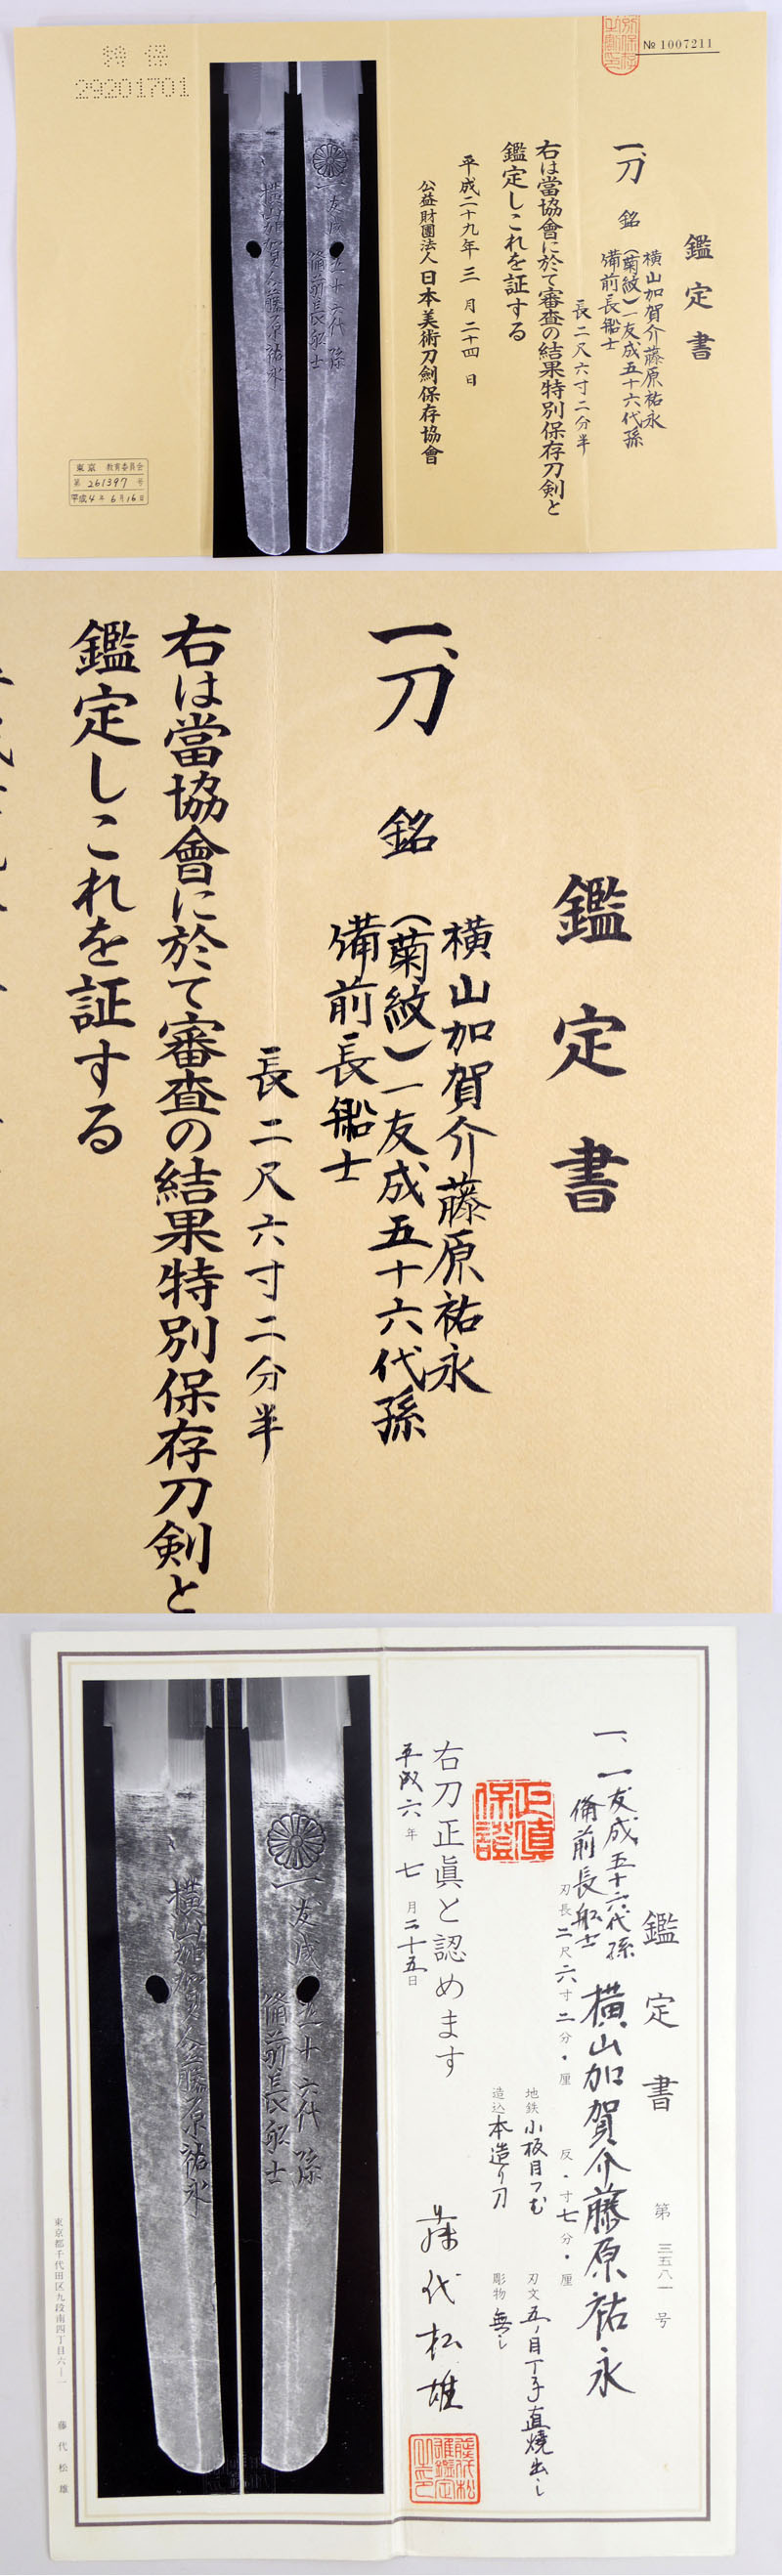 横山加賀介藤原祐永 (初代) Picture of Certificate